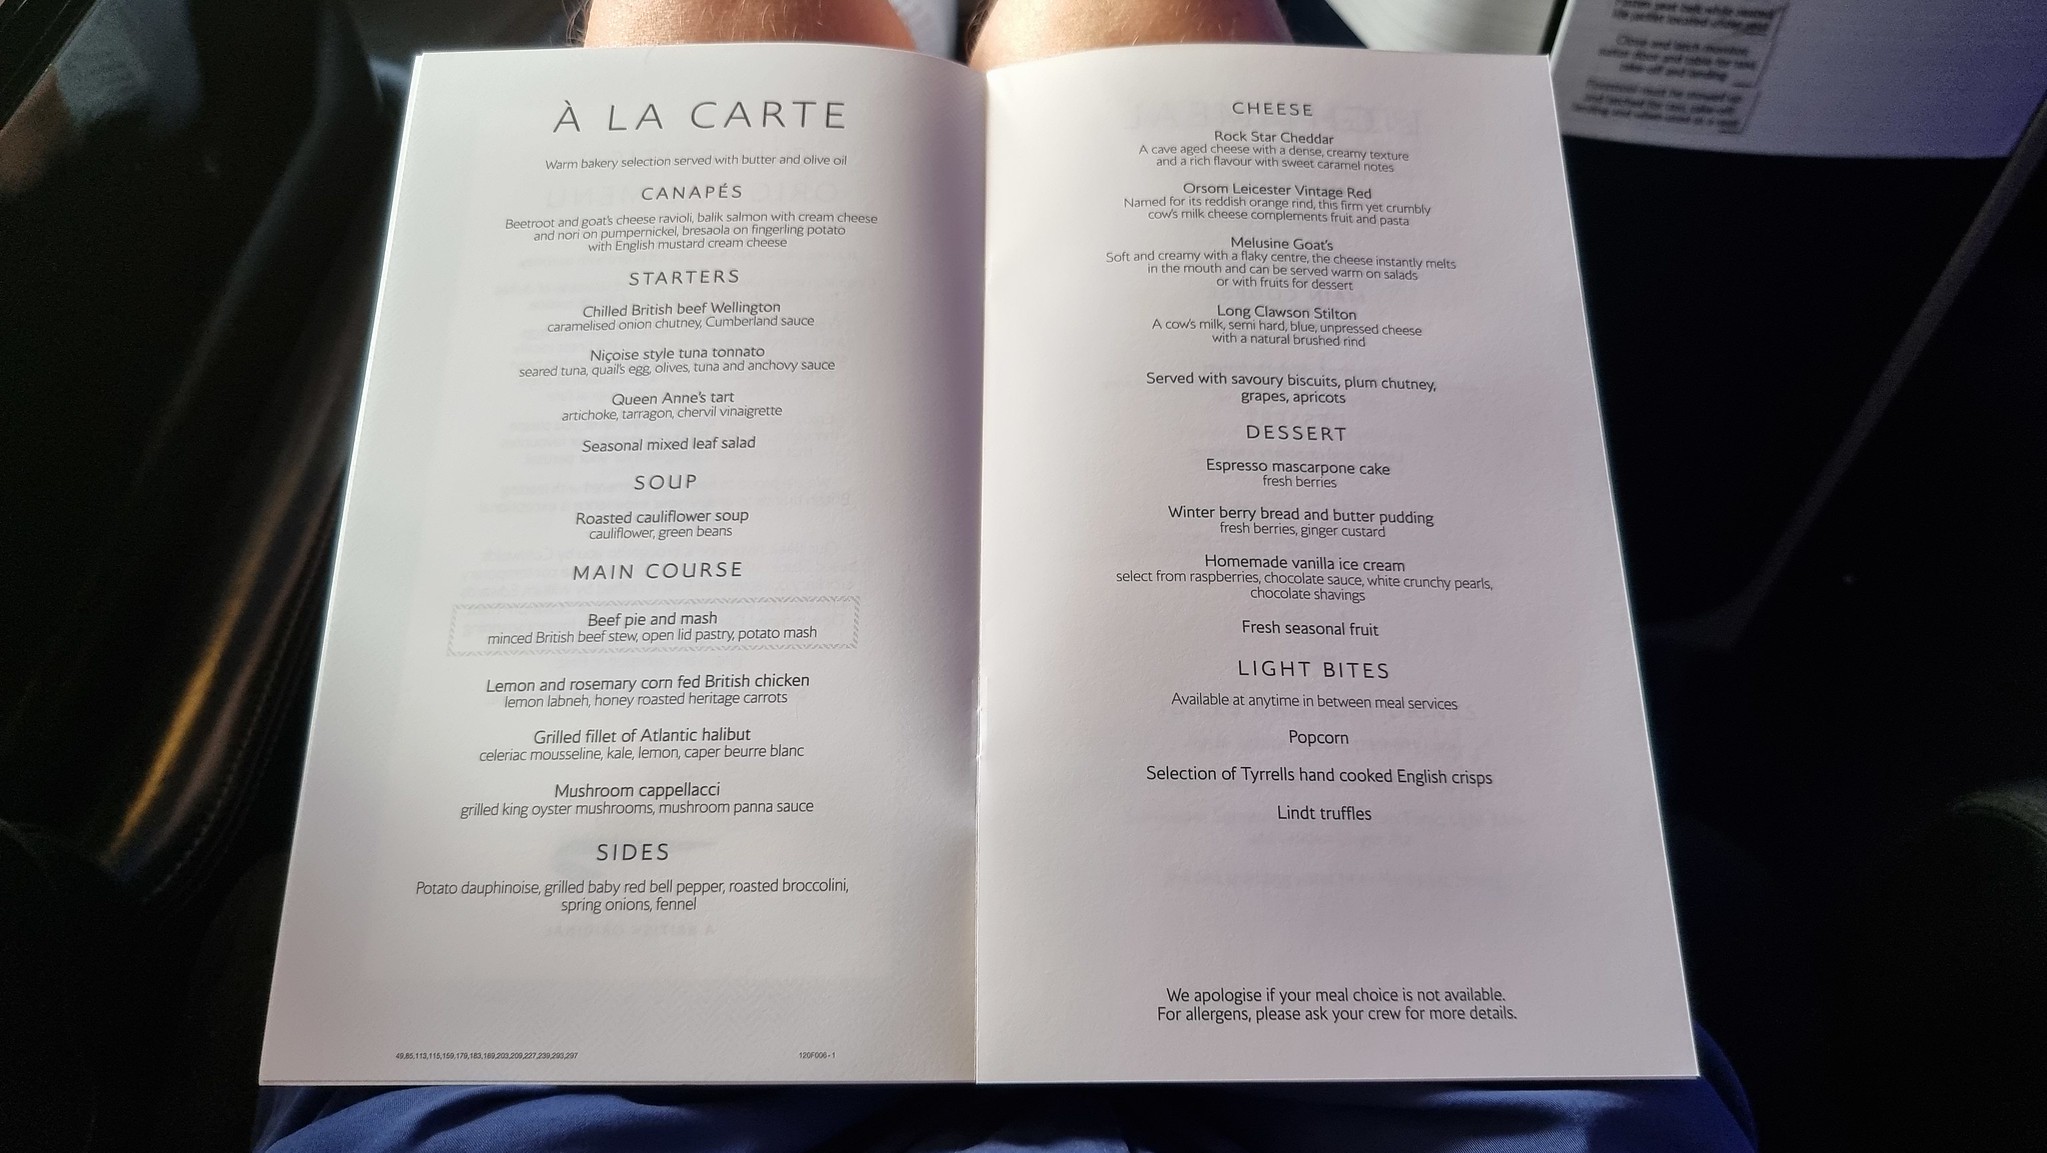 The amazing menu on board the BA flight to New York JFK